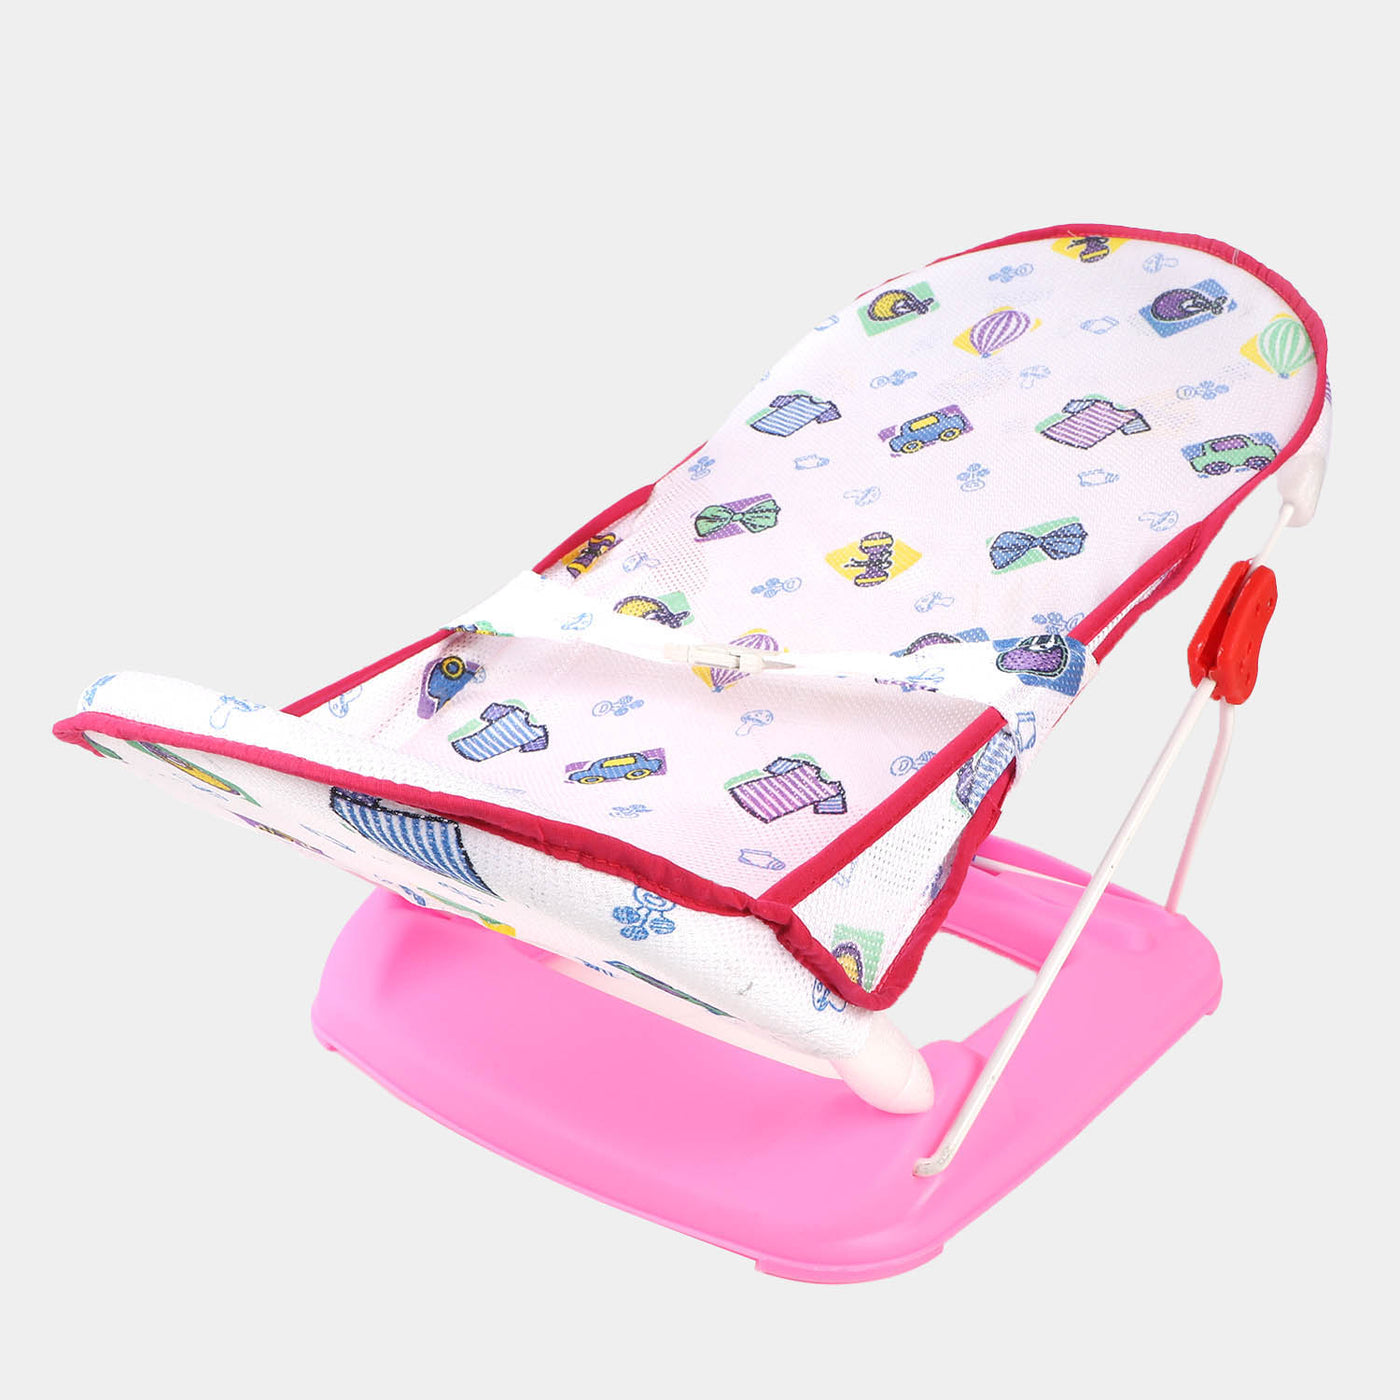 Baby Comfort Luxurious Baby Bather